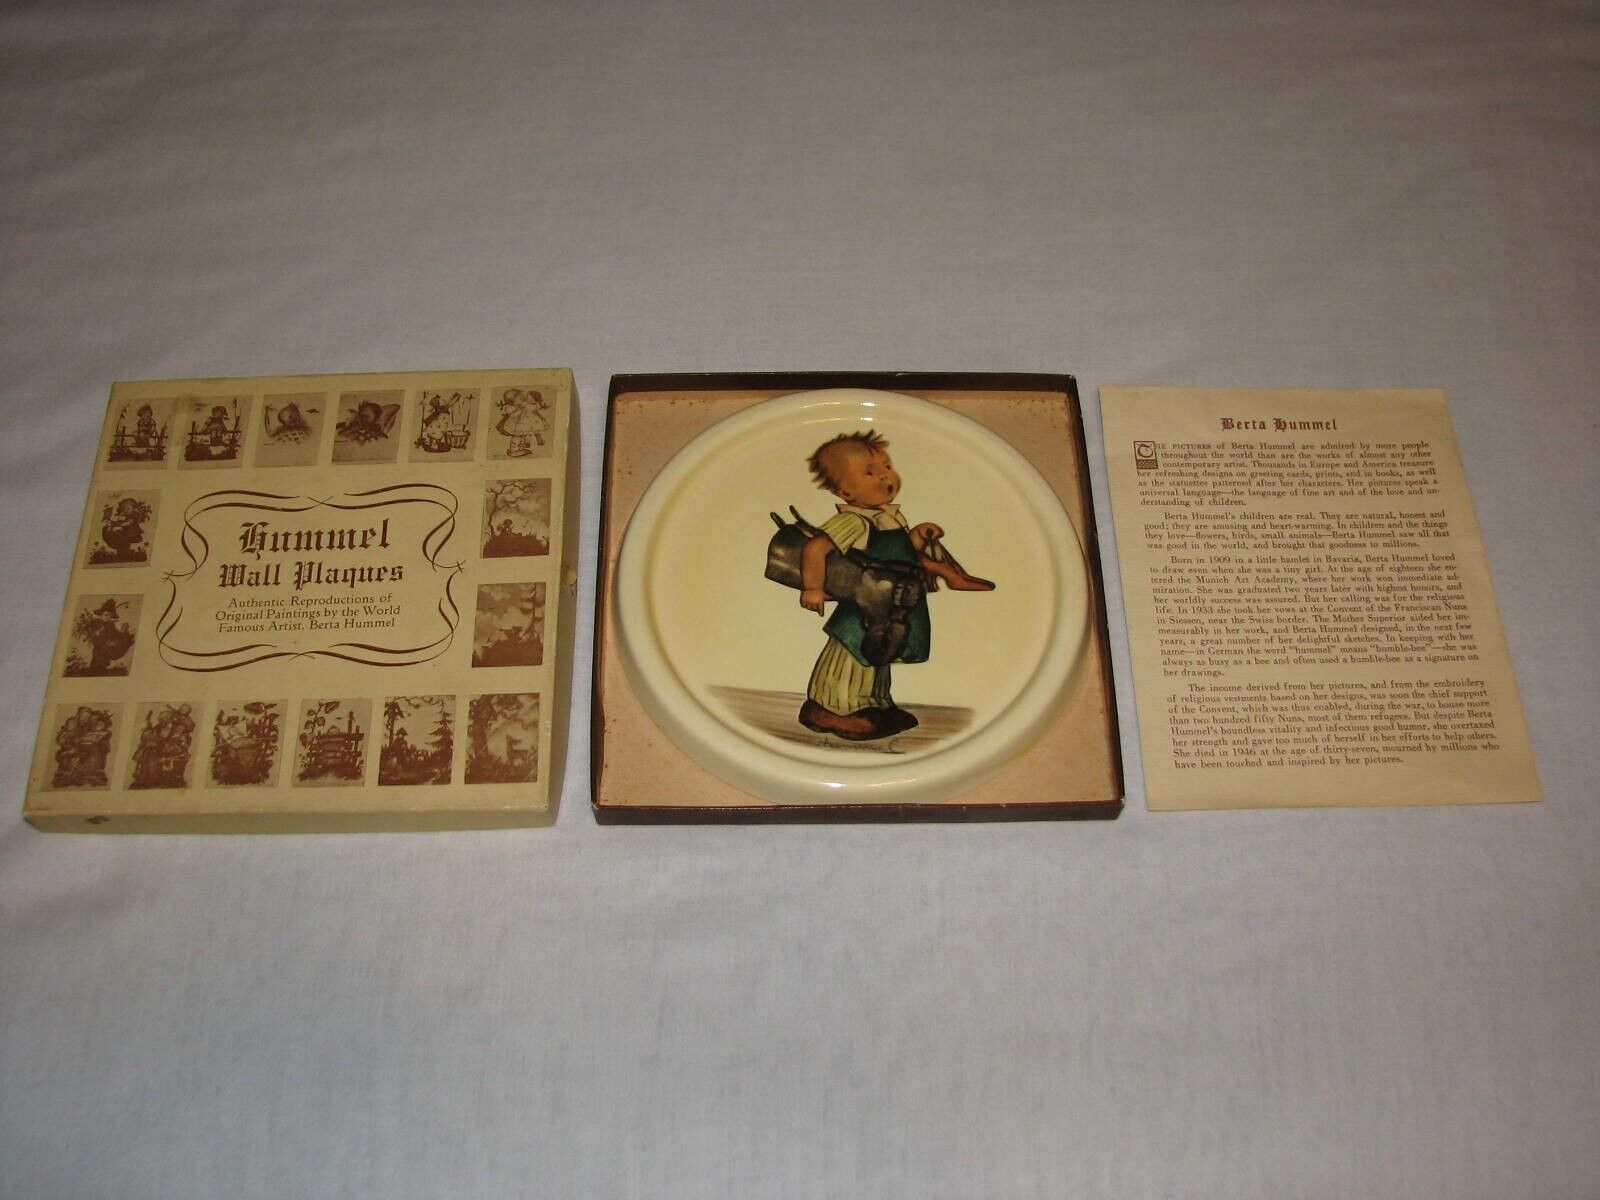 Berta HUMMEL ceramic Wall Figure plaque Art reproductions in BOX OLD vintage 